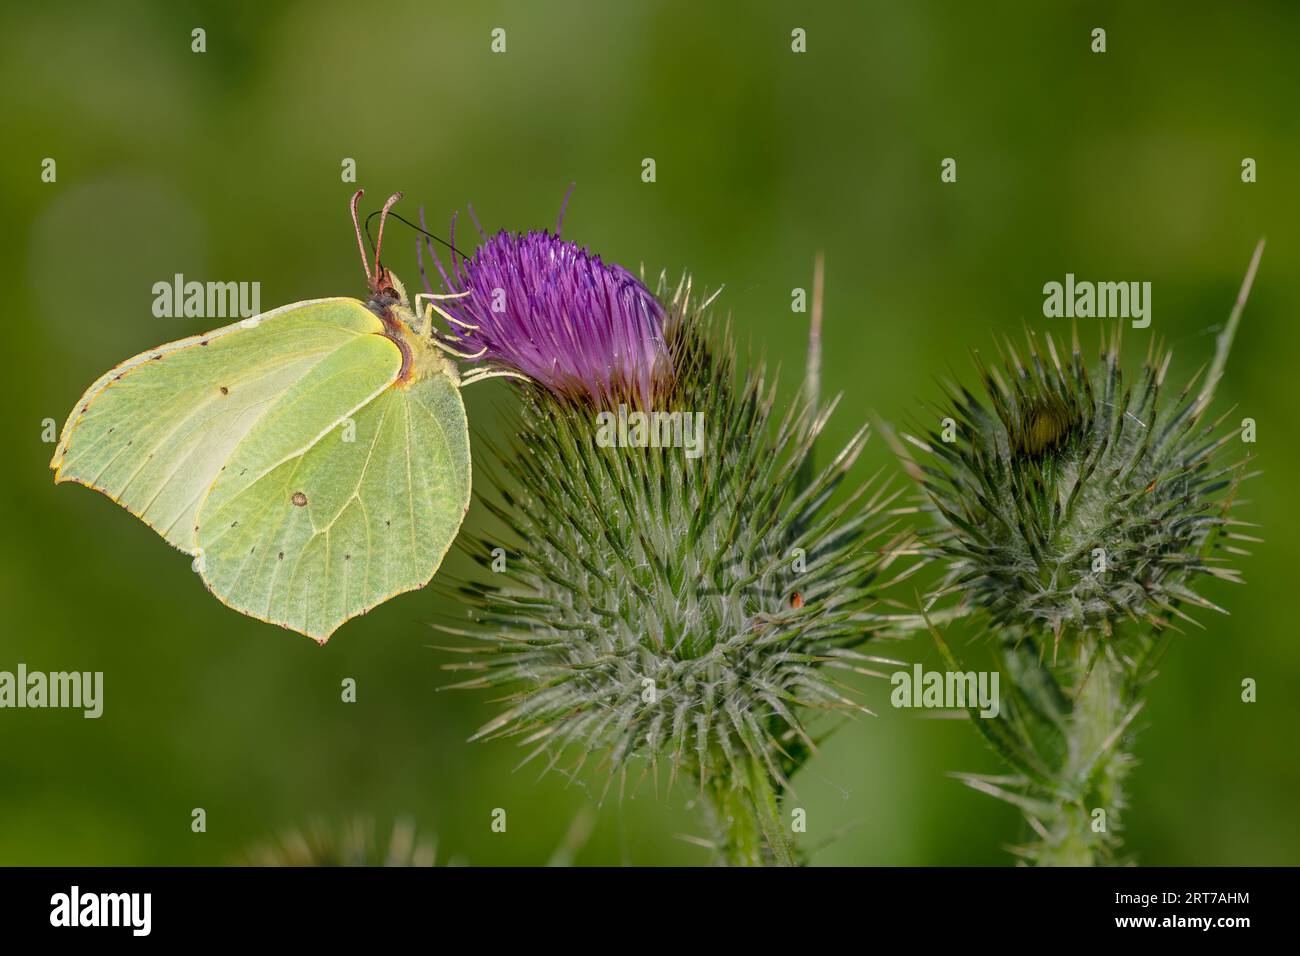 Common Brimstone - Gonepteryx rhamni, beautiful yellow butterfly from European gardens and meadows, Jeseniky, Czech Republic. Stock Photo